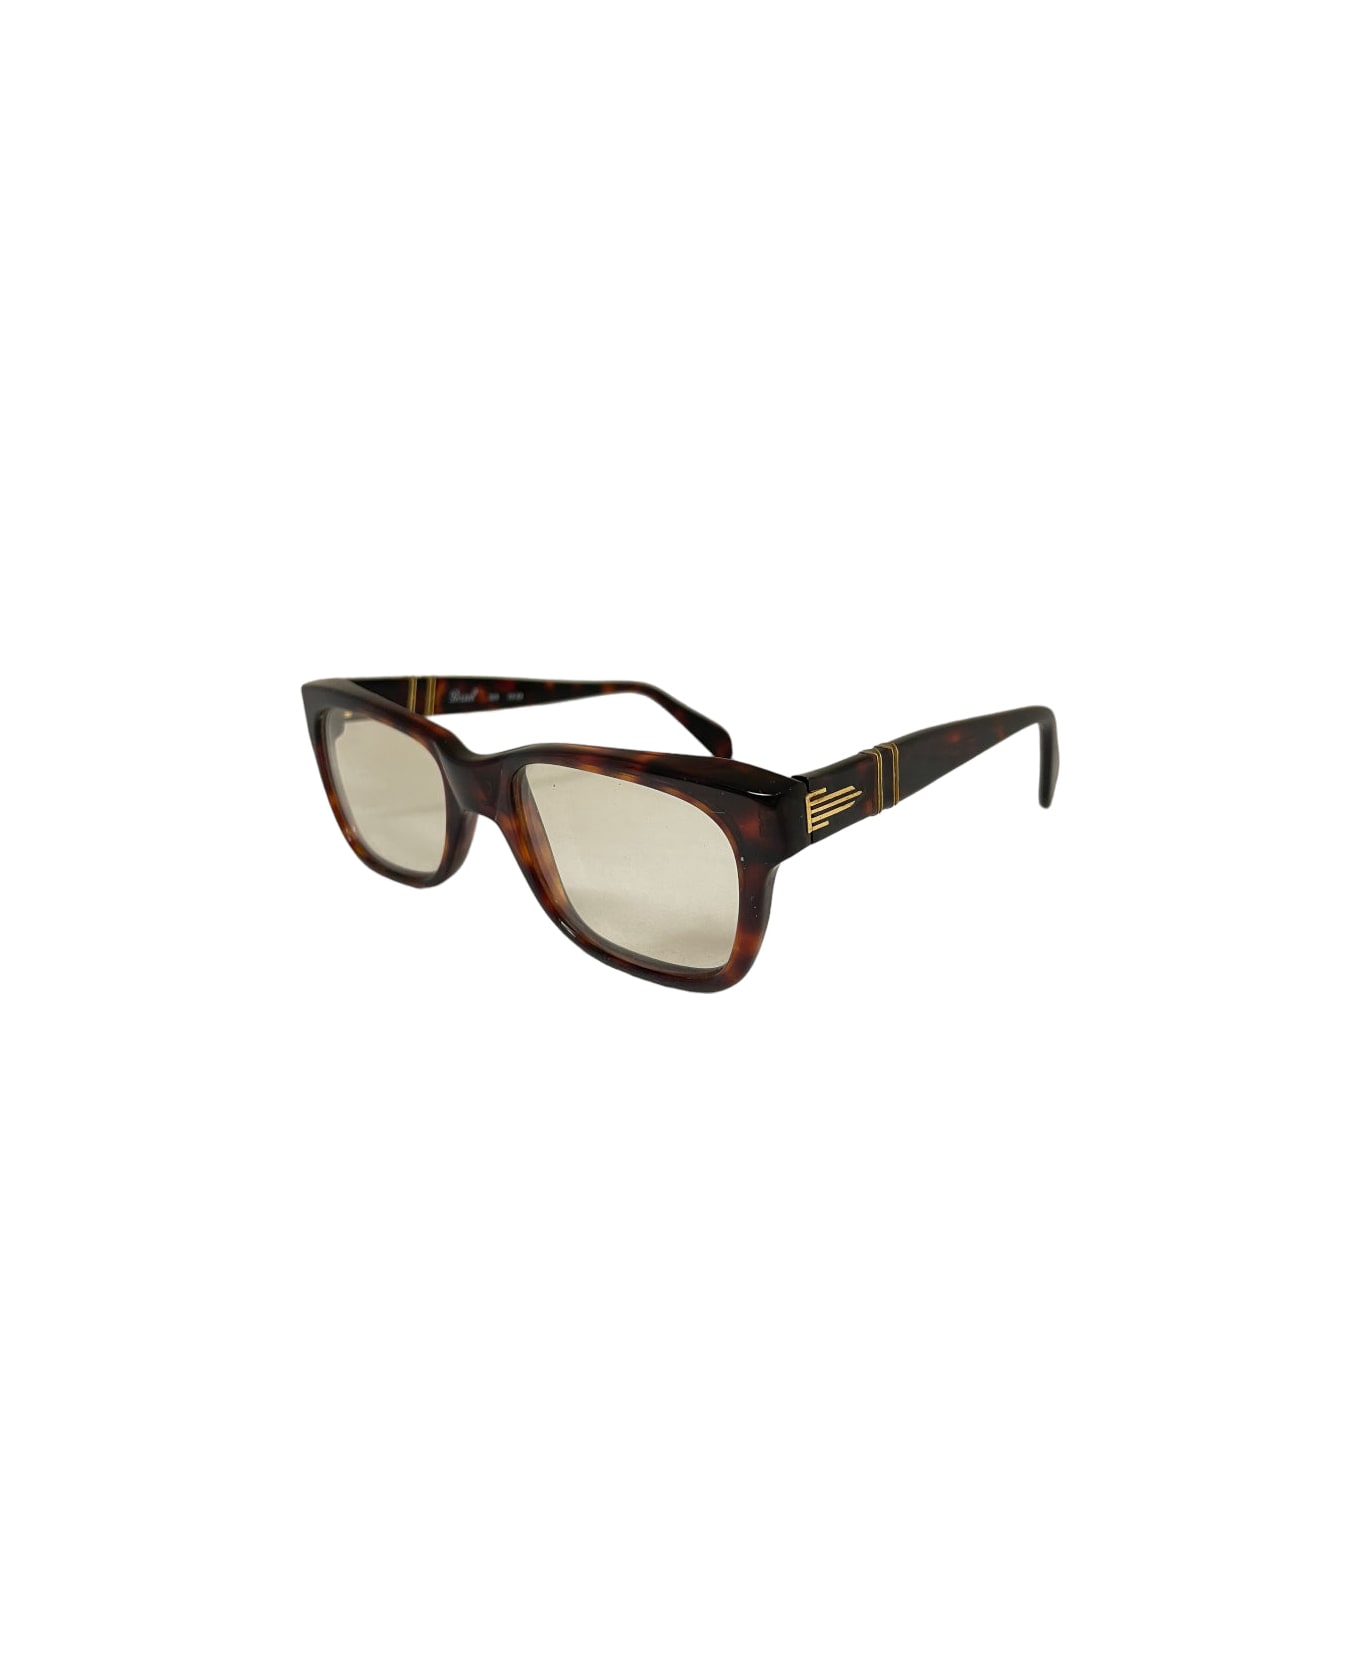 Persol 305 - Havana Sunglasses サングラス